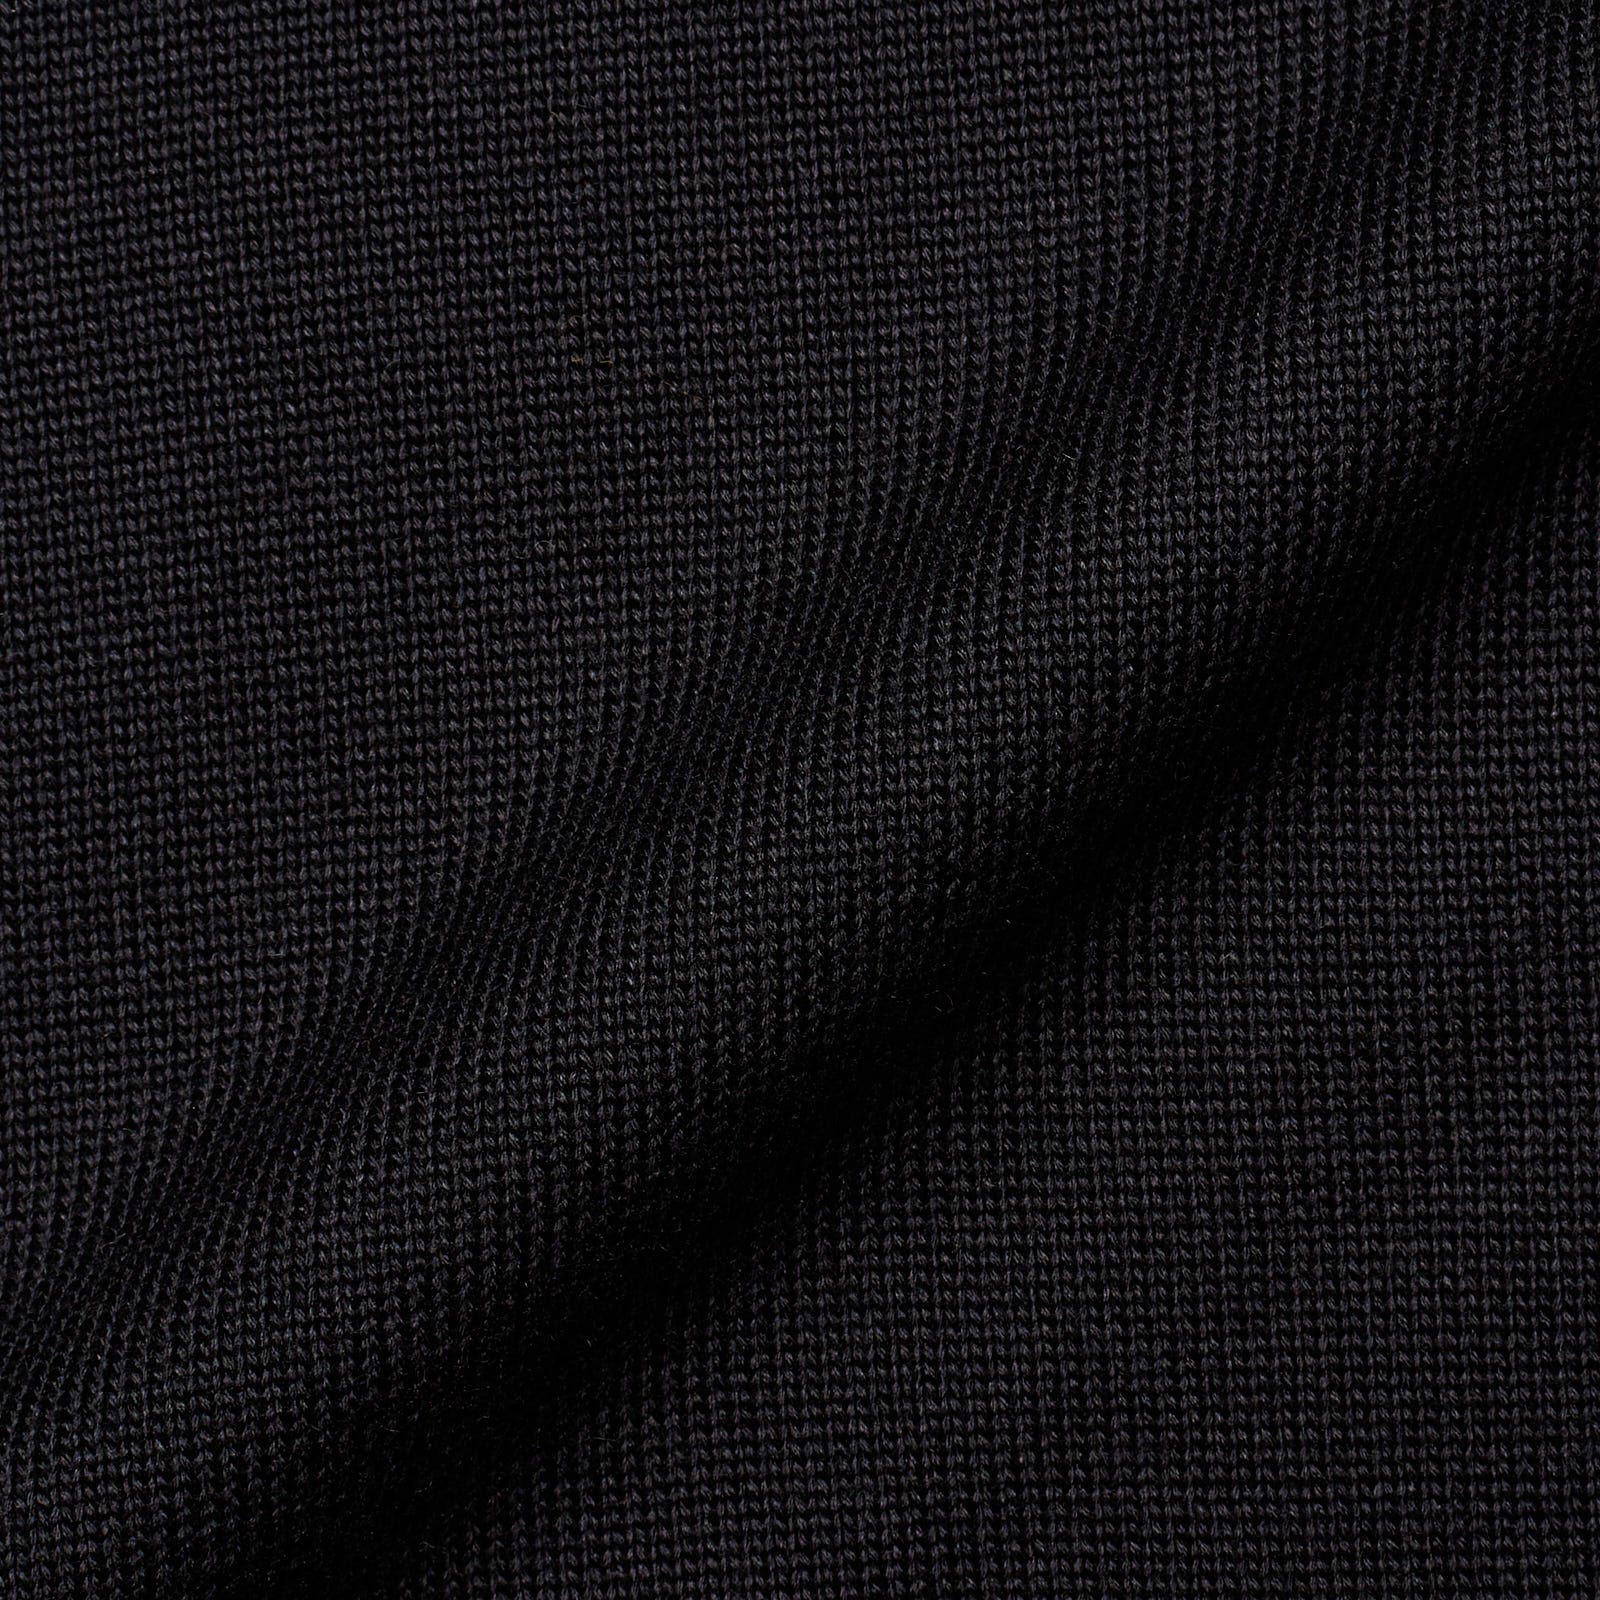 BERLUTI Paris Black Wool Knit Cardigan Sweater with Mulberry Silk Details NEW Size M BERLUTI